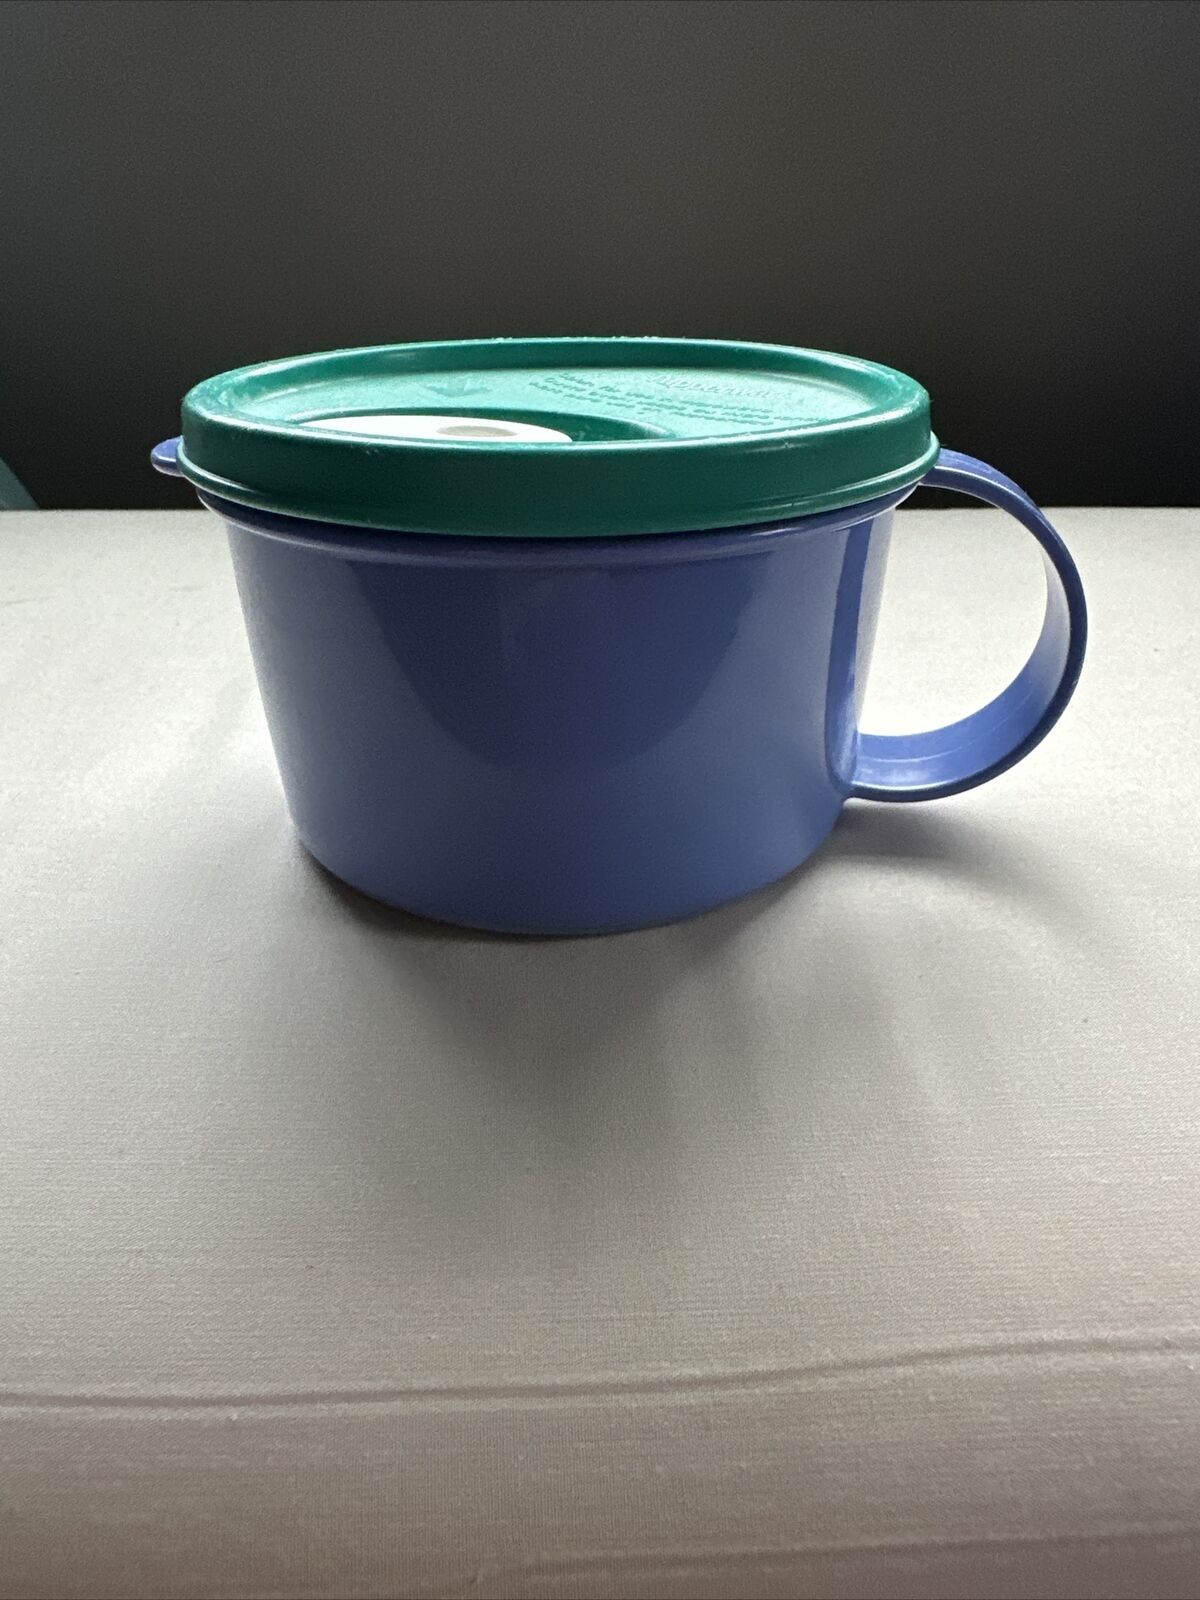 Tupperware Crystal Wave Microwavable Soup Mug #3155B-4 with Vent Lid - #4 16 Oz